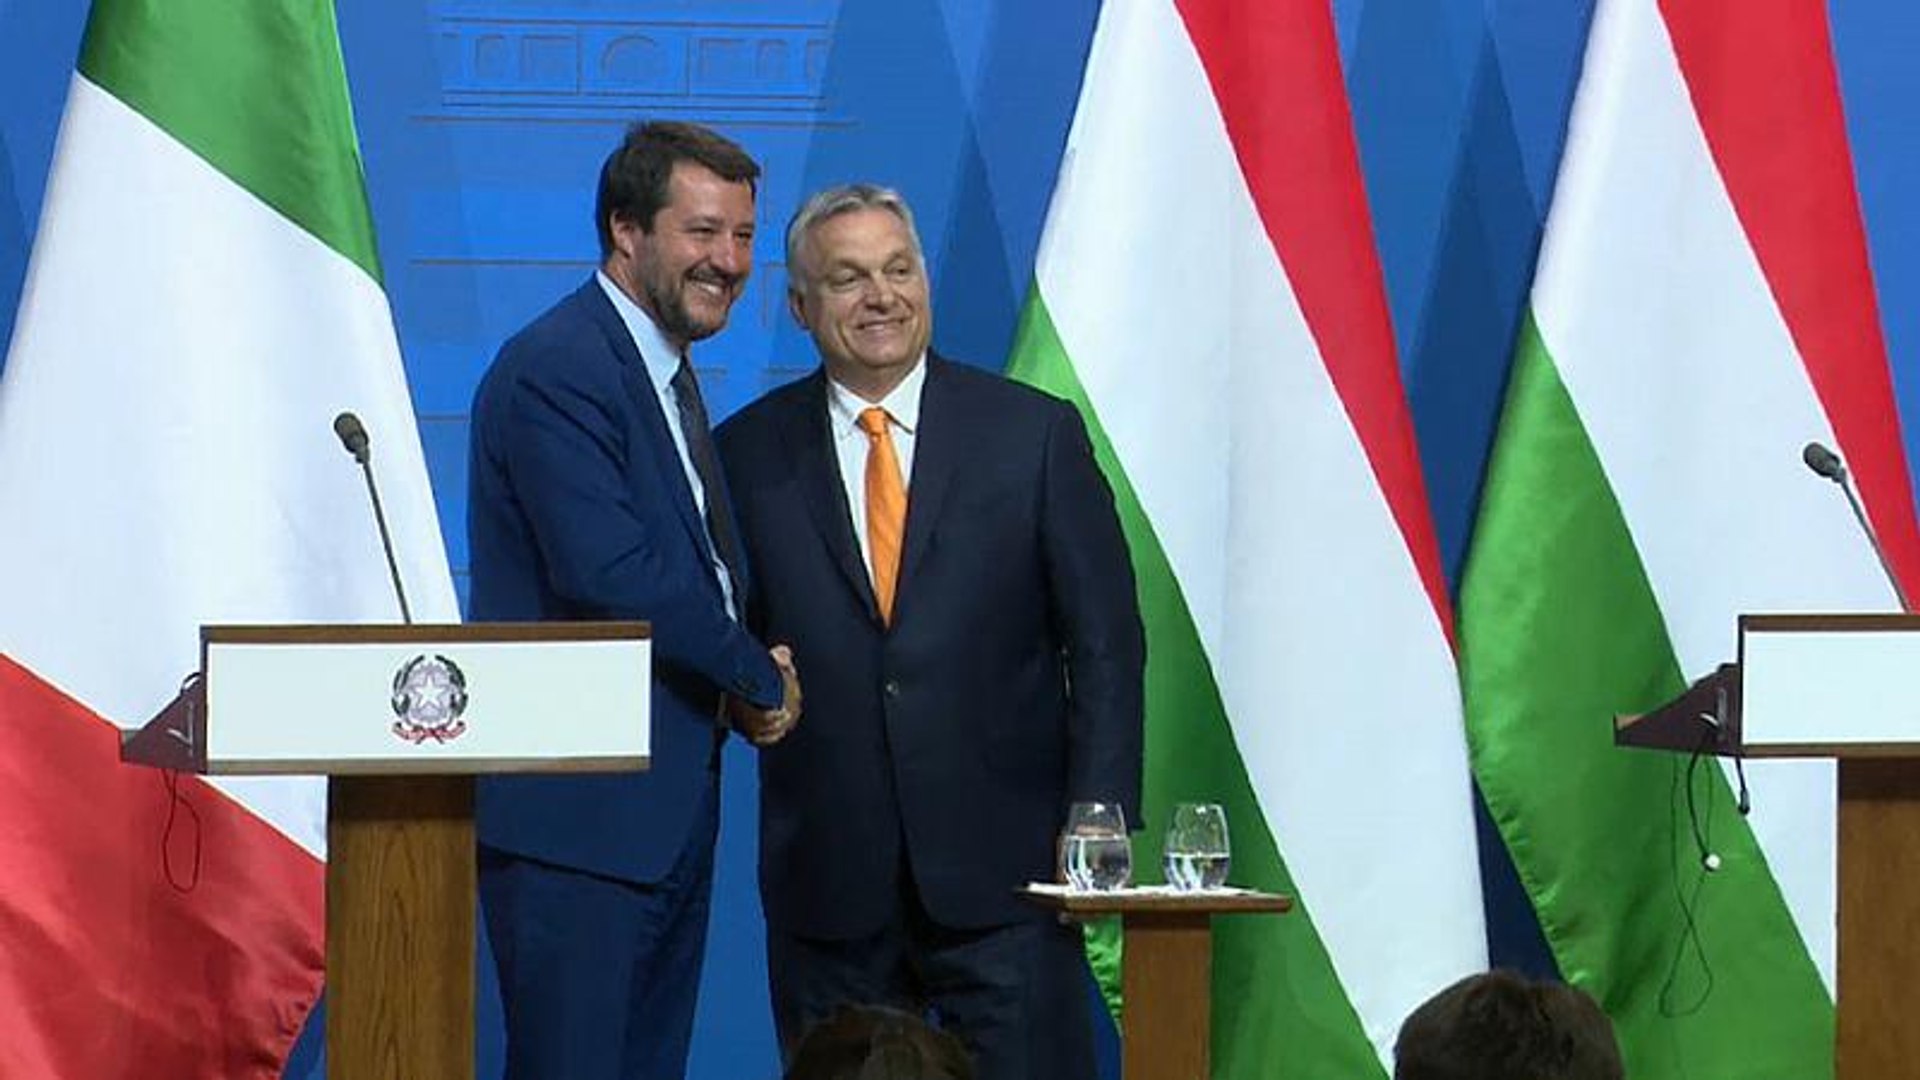 Salvini à conquista de Orbán